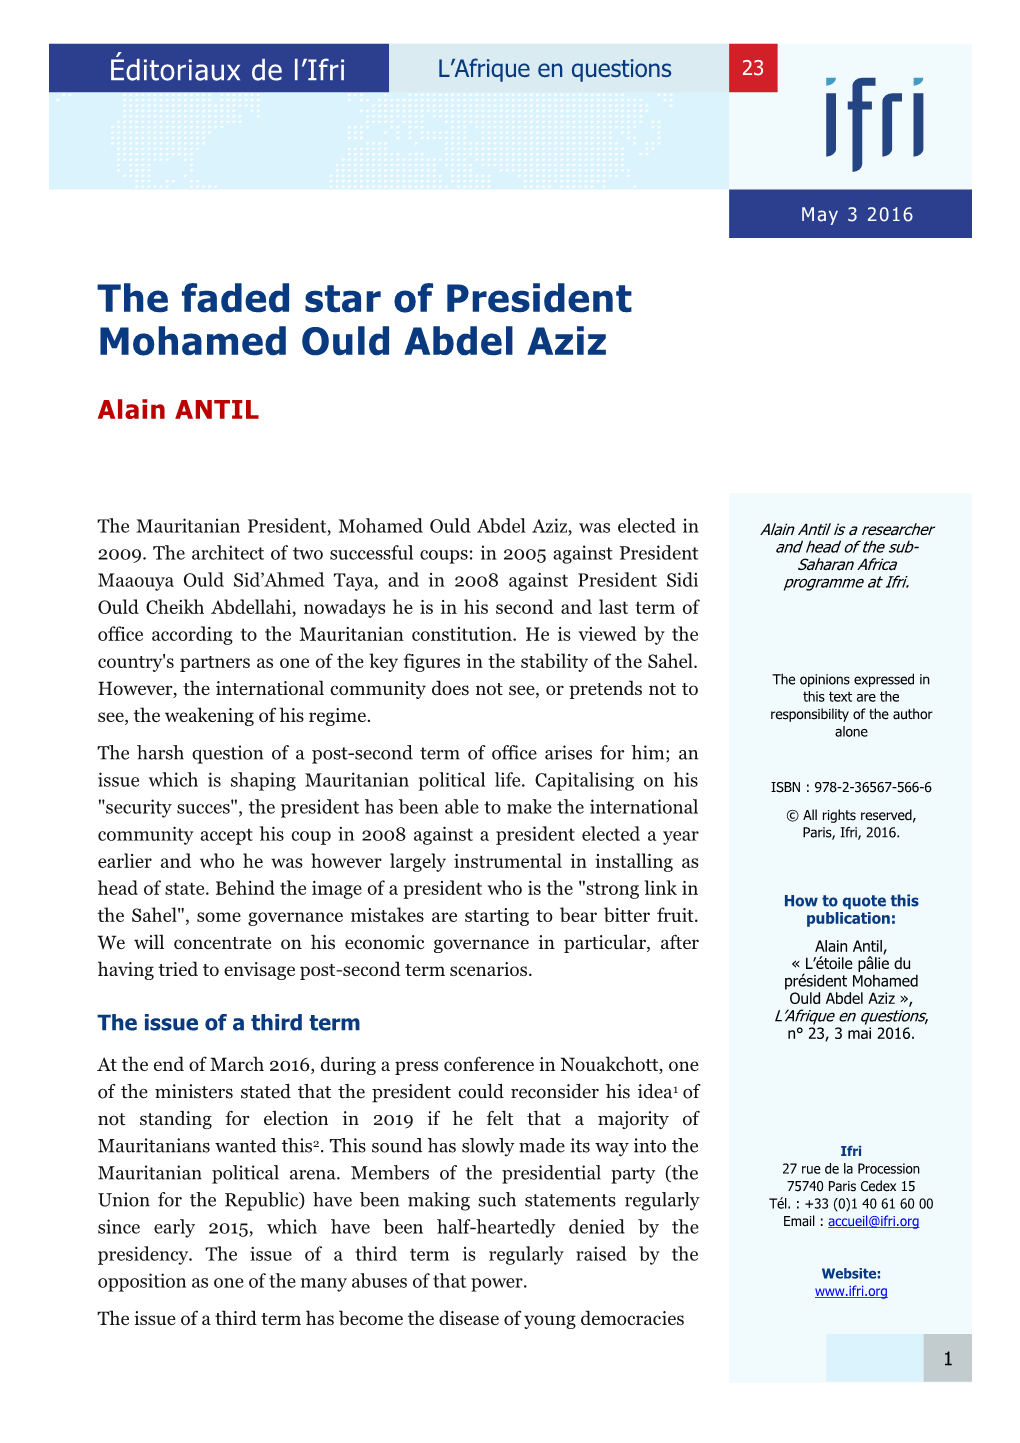 The Faded Star of President Mohamed Ould Abdel Aziz